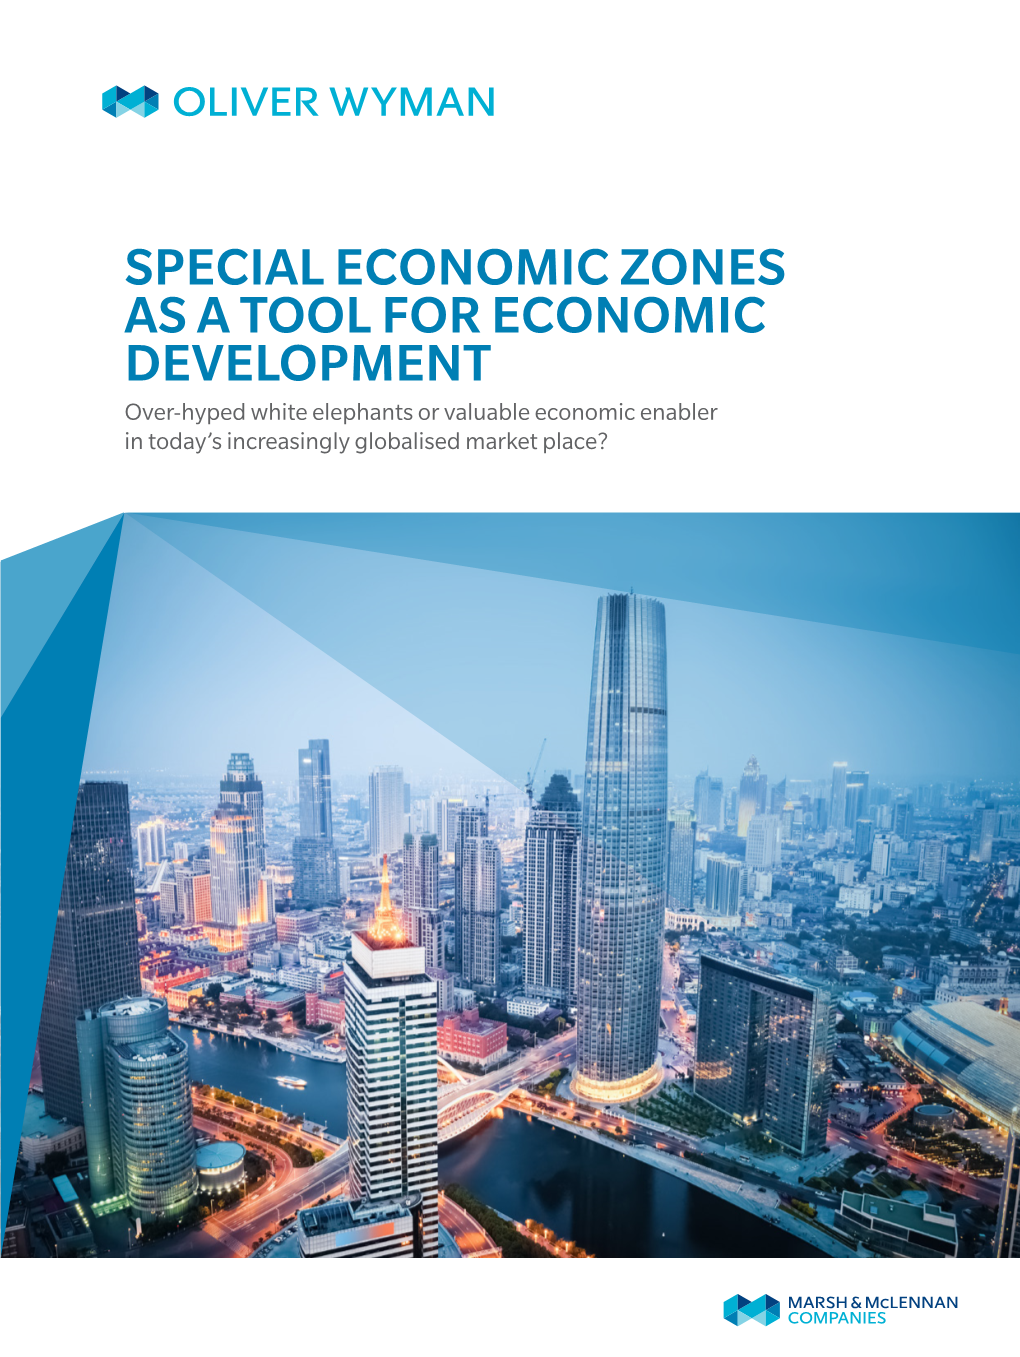 [Special Economic Zones As a Tool for Economic Development]